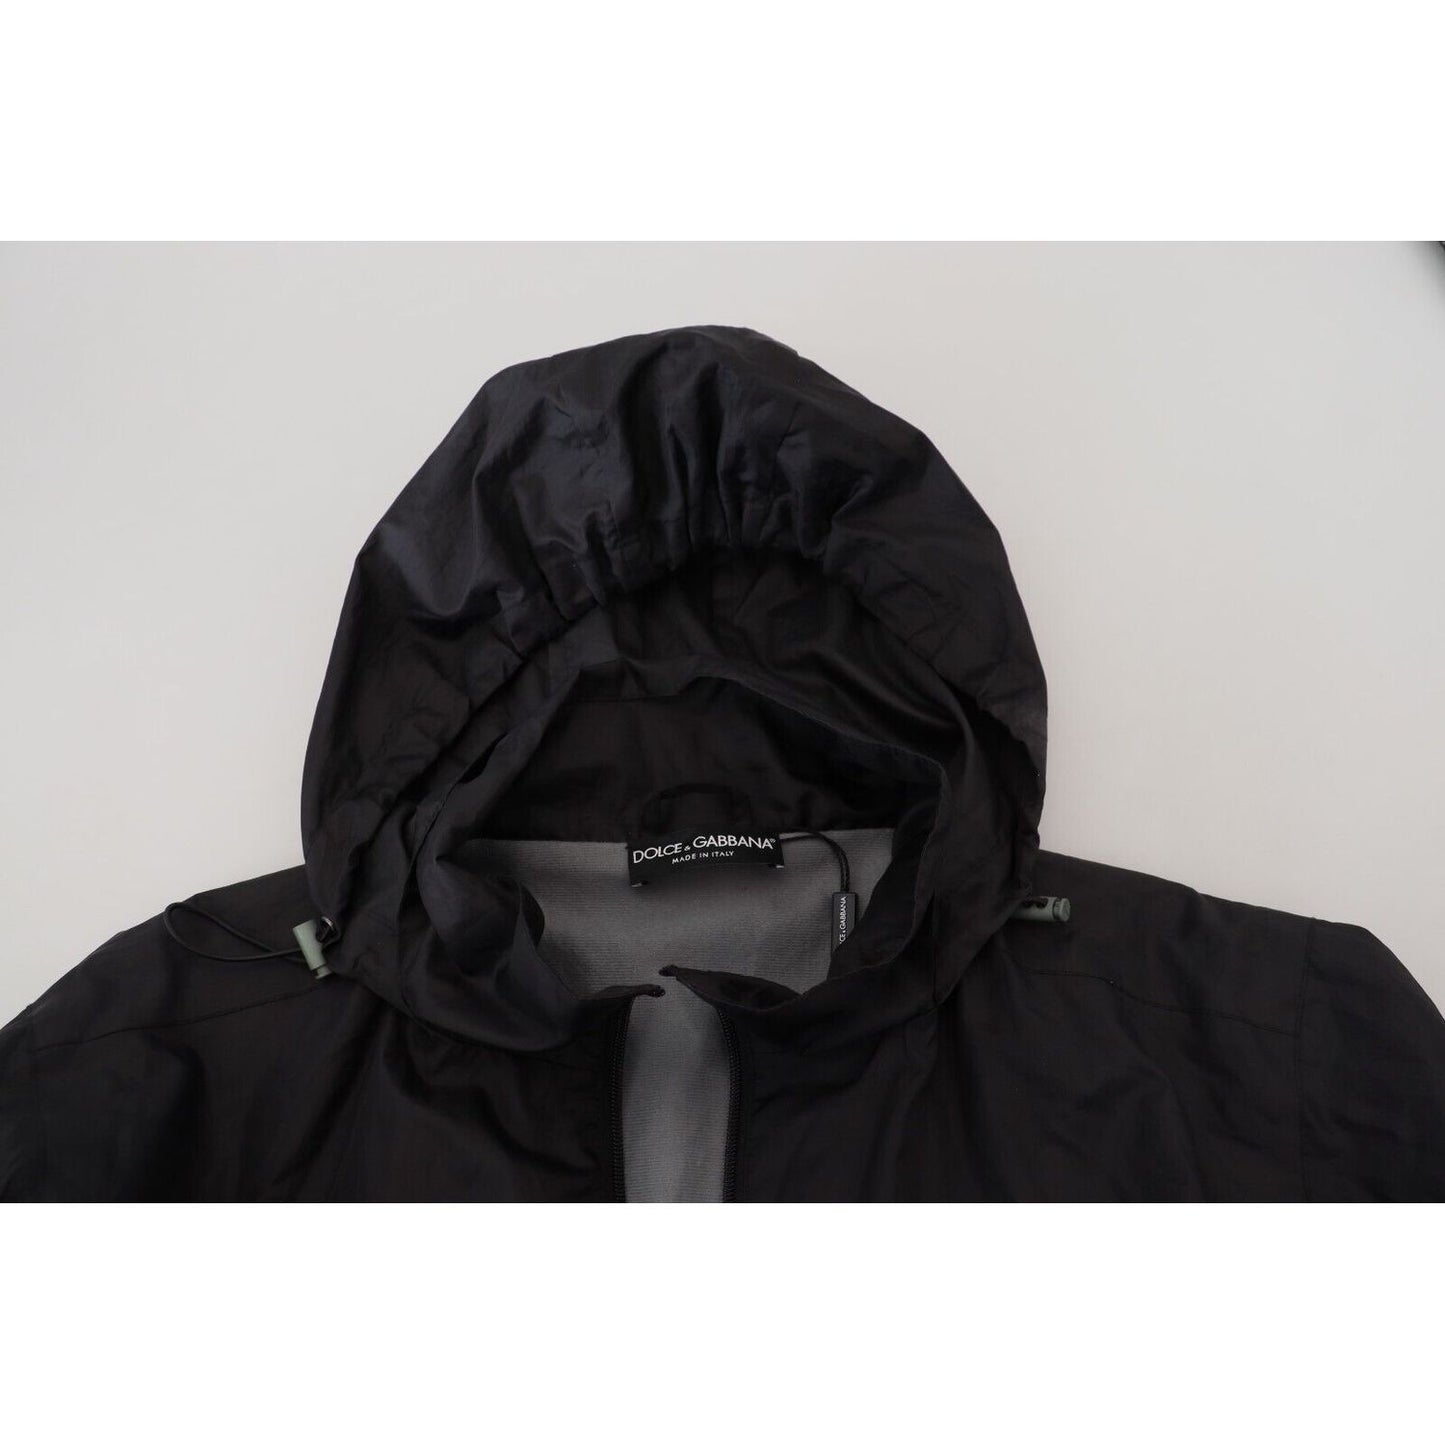 Dolce & Gabbana Sleek Black Nylon Bomber Jacket black-printed-nylon-hooded-bomber-jacket